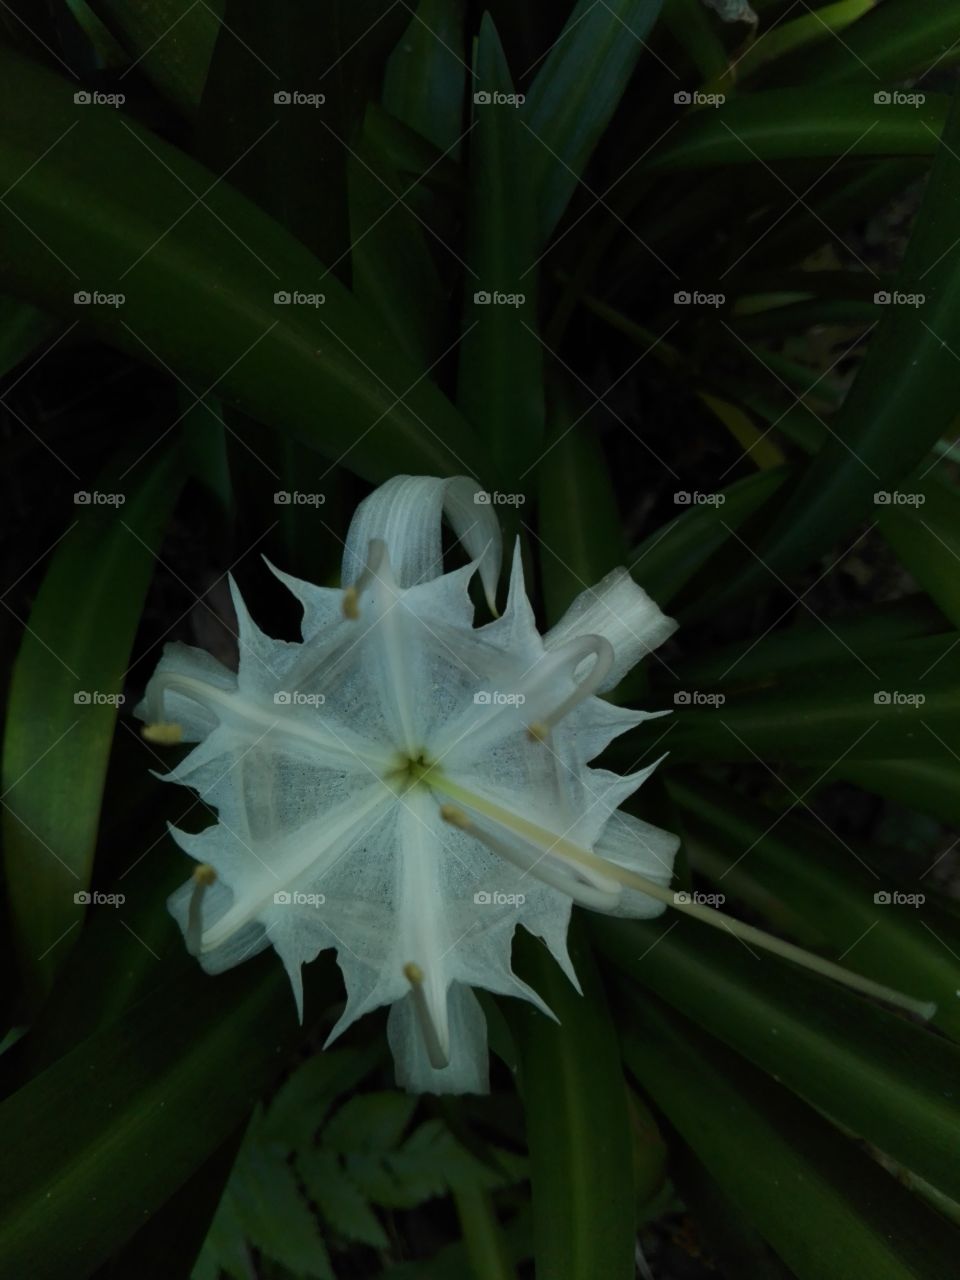 A rare beautiful white flower.